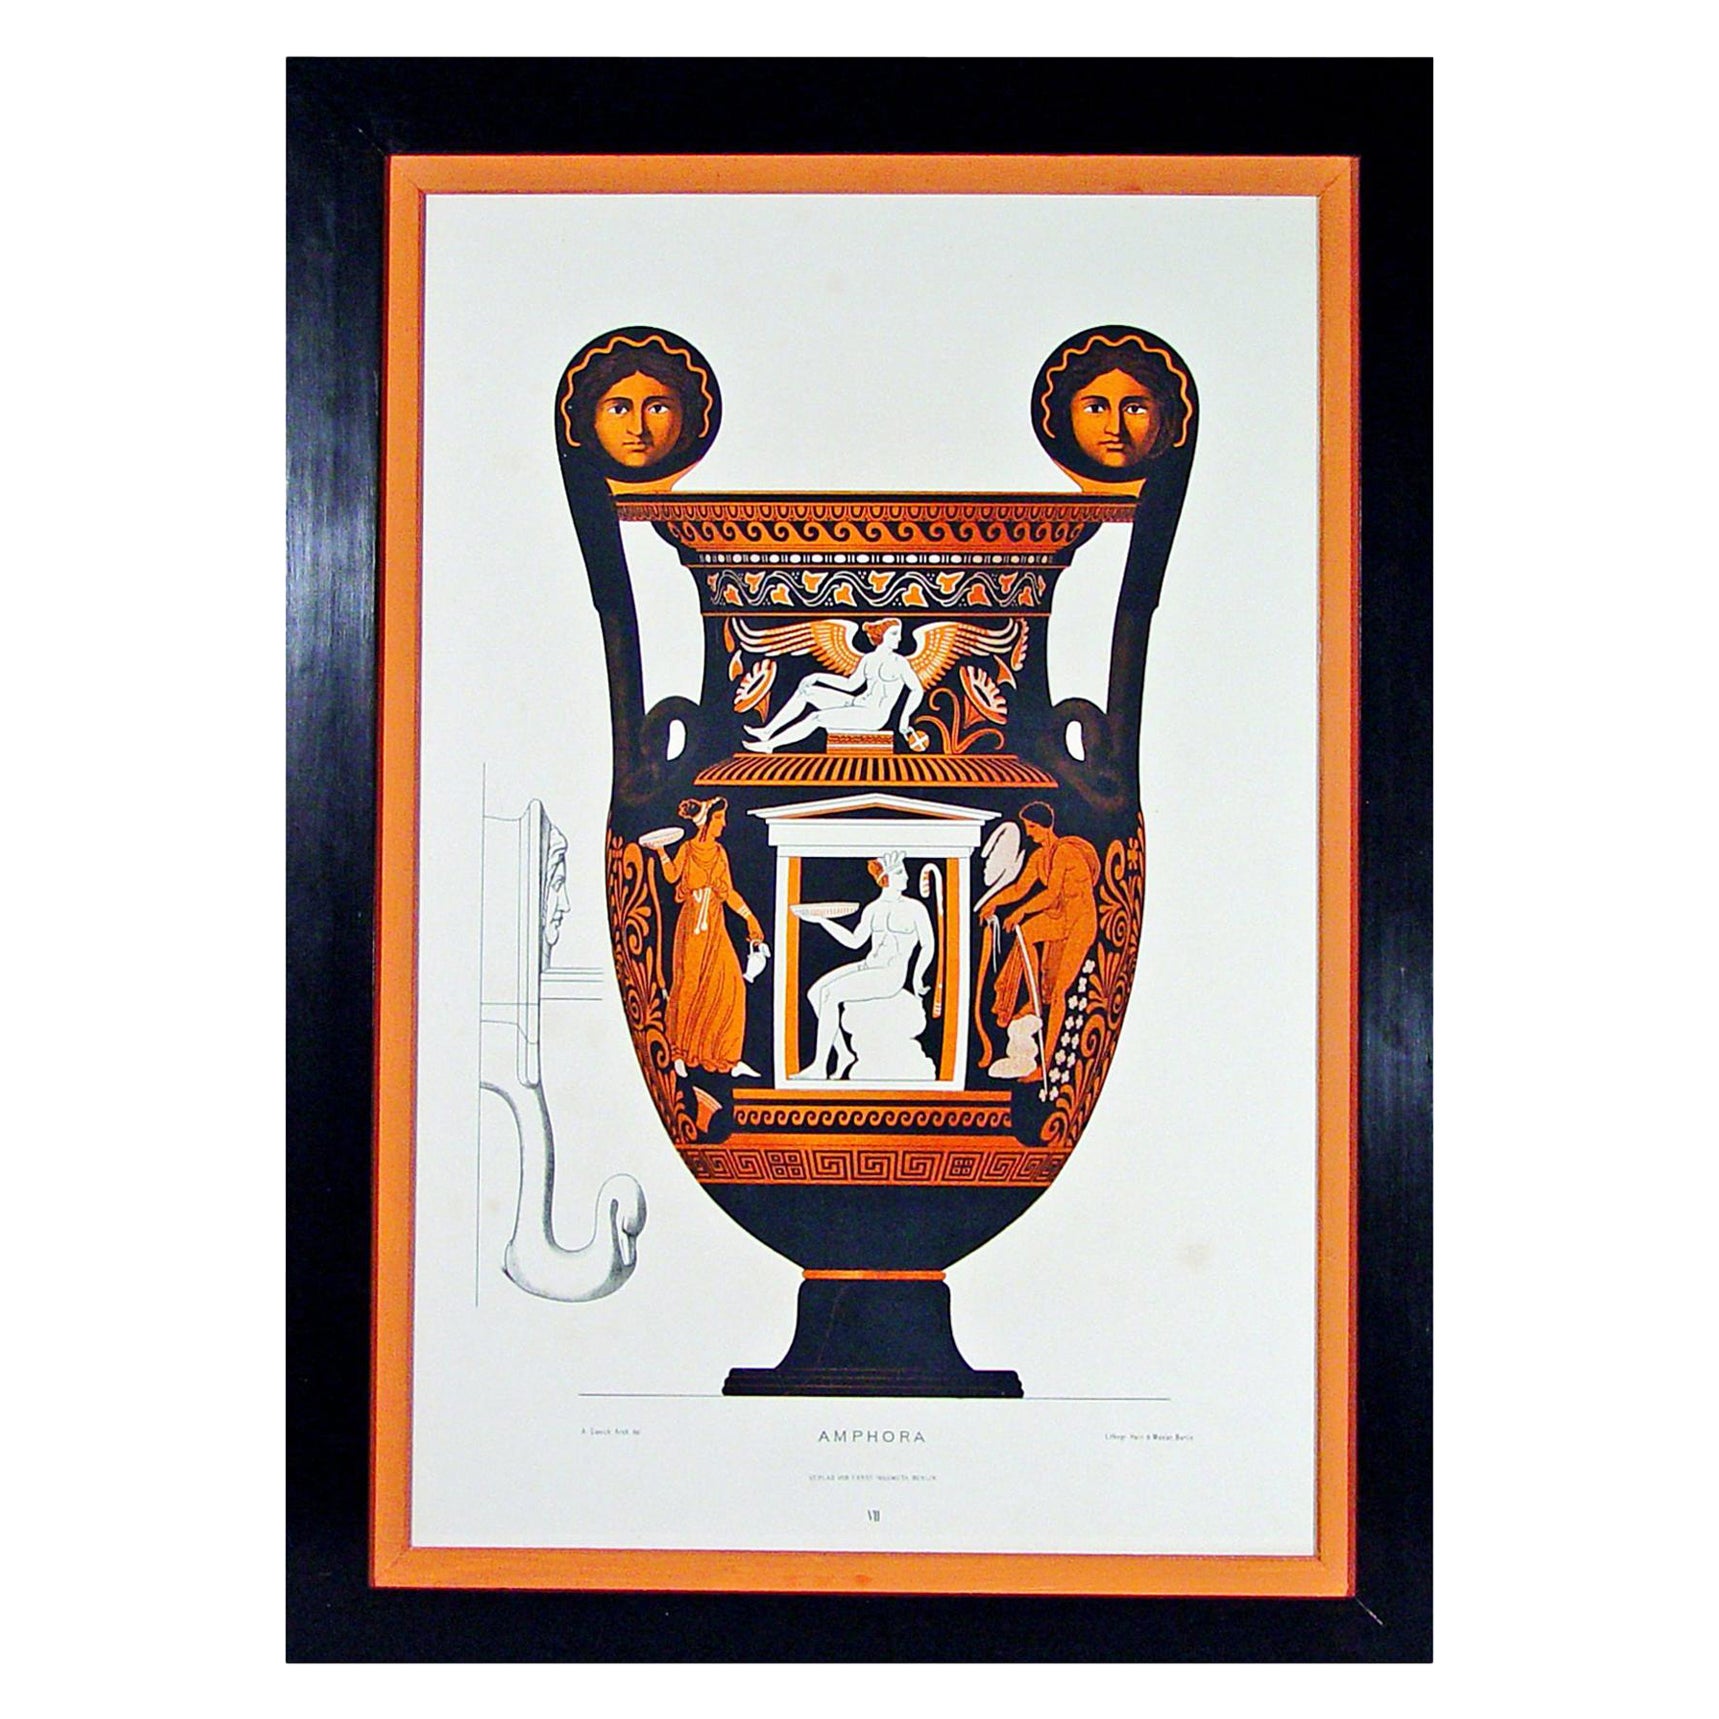 Albert Genick, a Lithographic Print of an Ancient Greek Vase, an Amphora